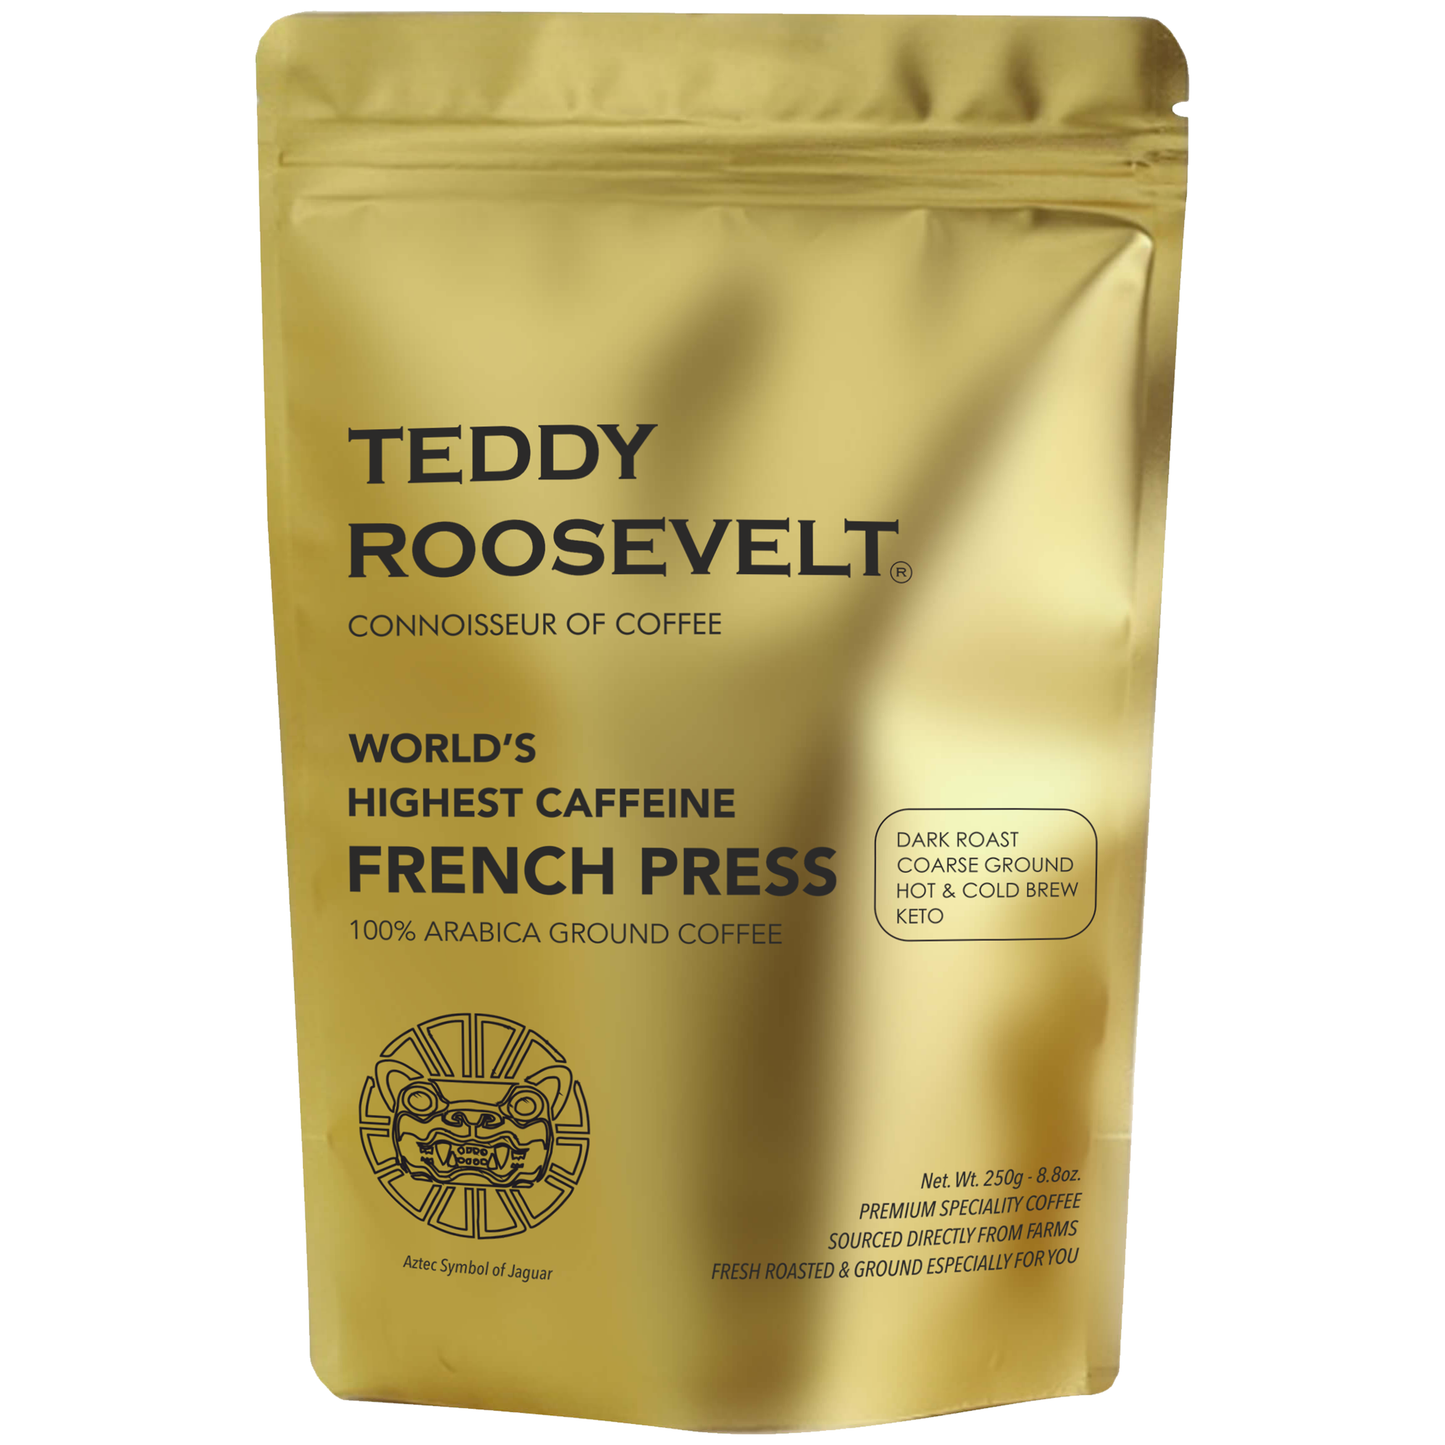 High Caffeine French Press Coffee Powder, Arabica Dark Roast Coarse Ground, 250g (Make Hot or Cold Brew) 